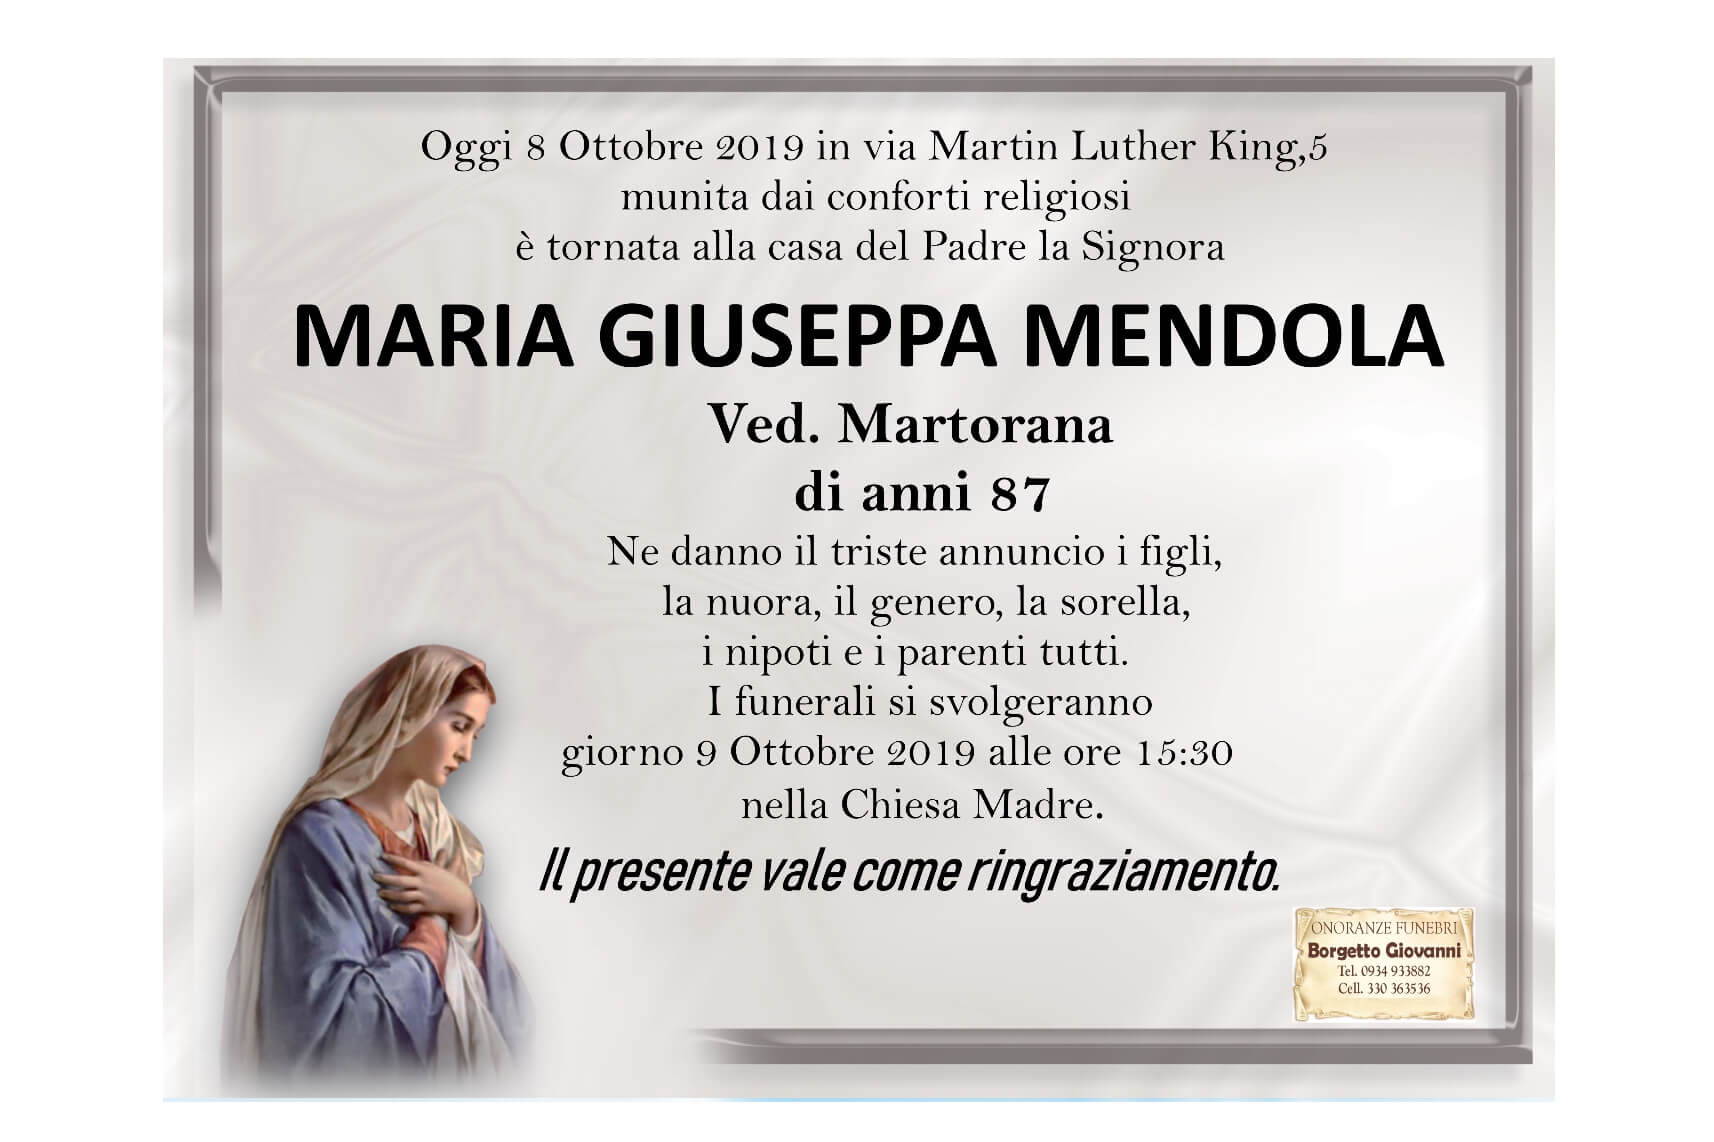 Maria Giuseppa Mendola